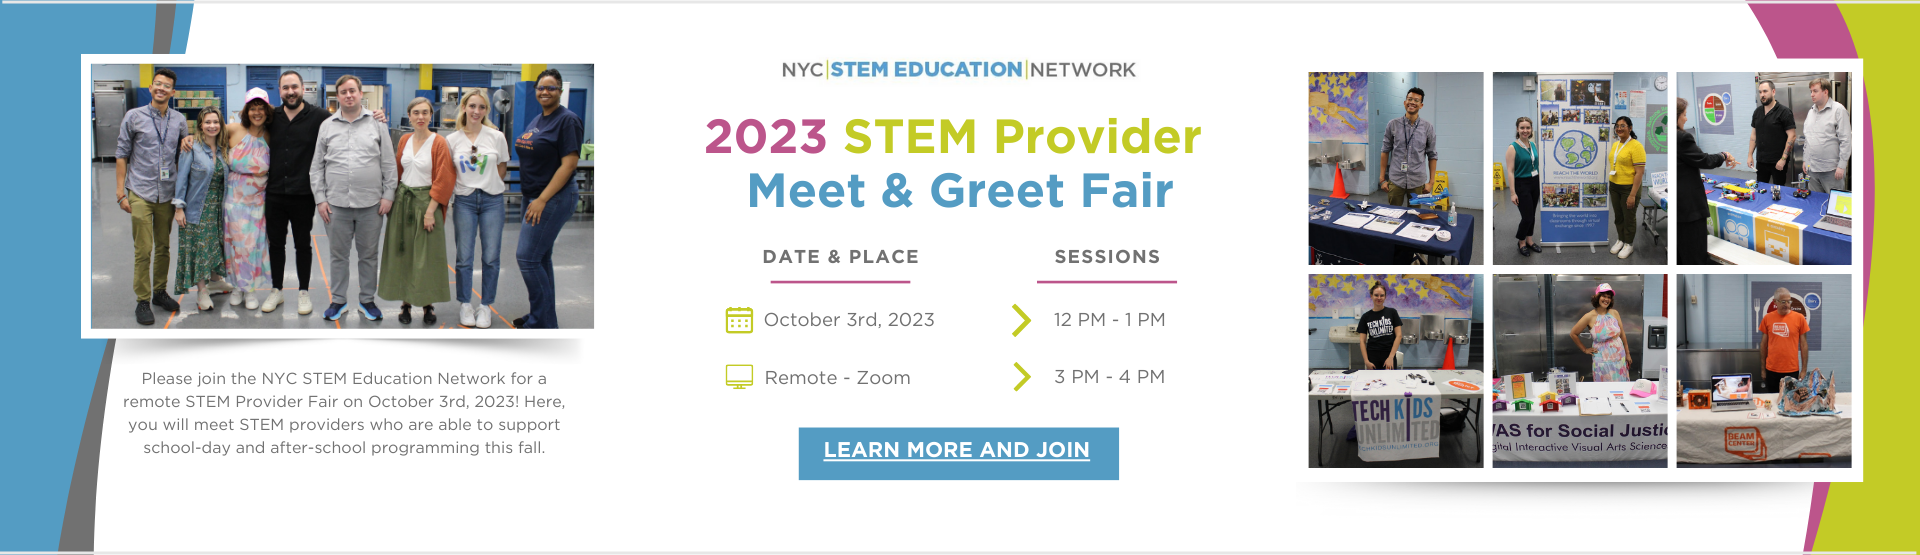 2023 STEM Provider Meet & Greet Fair